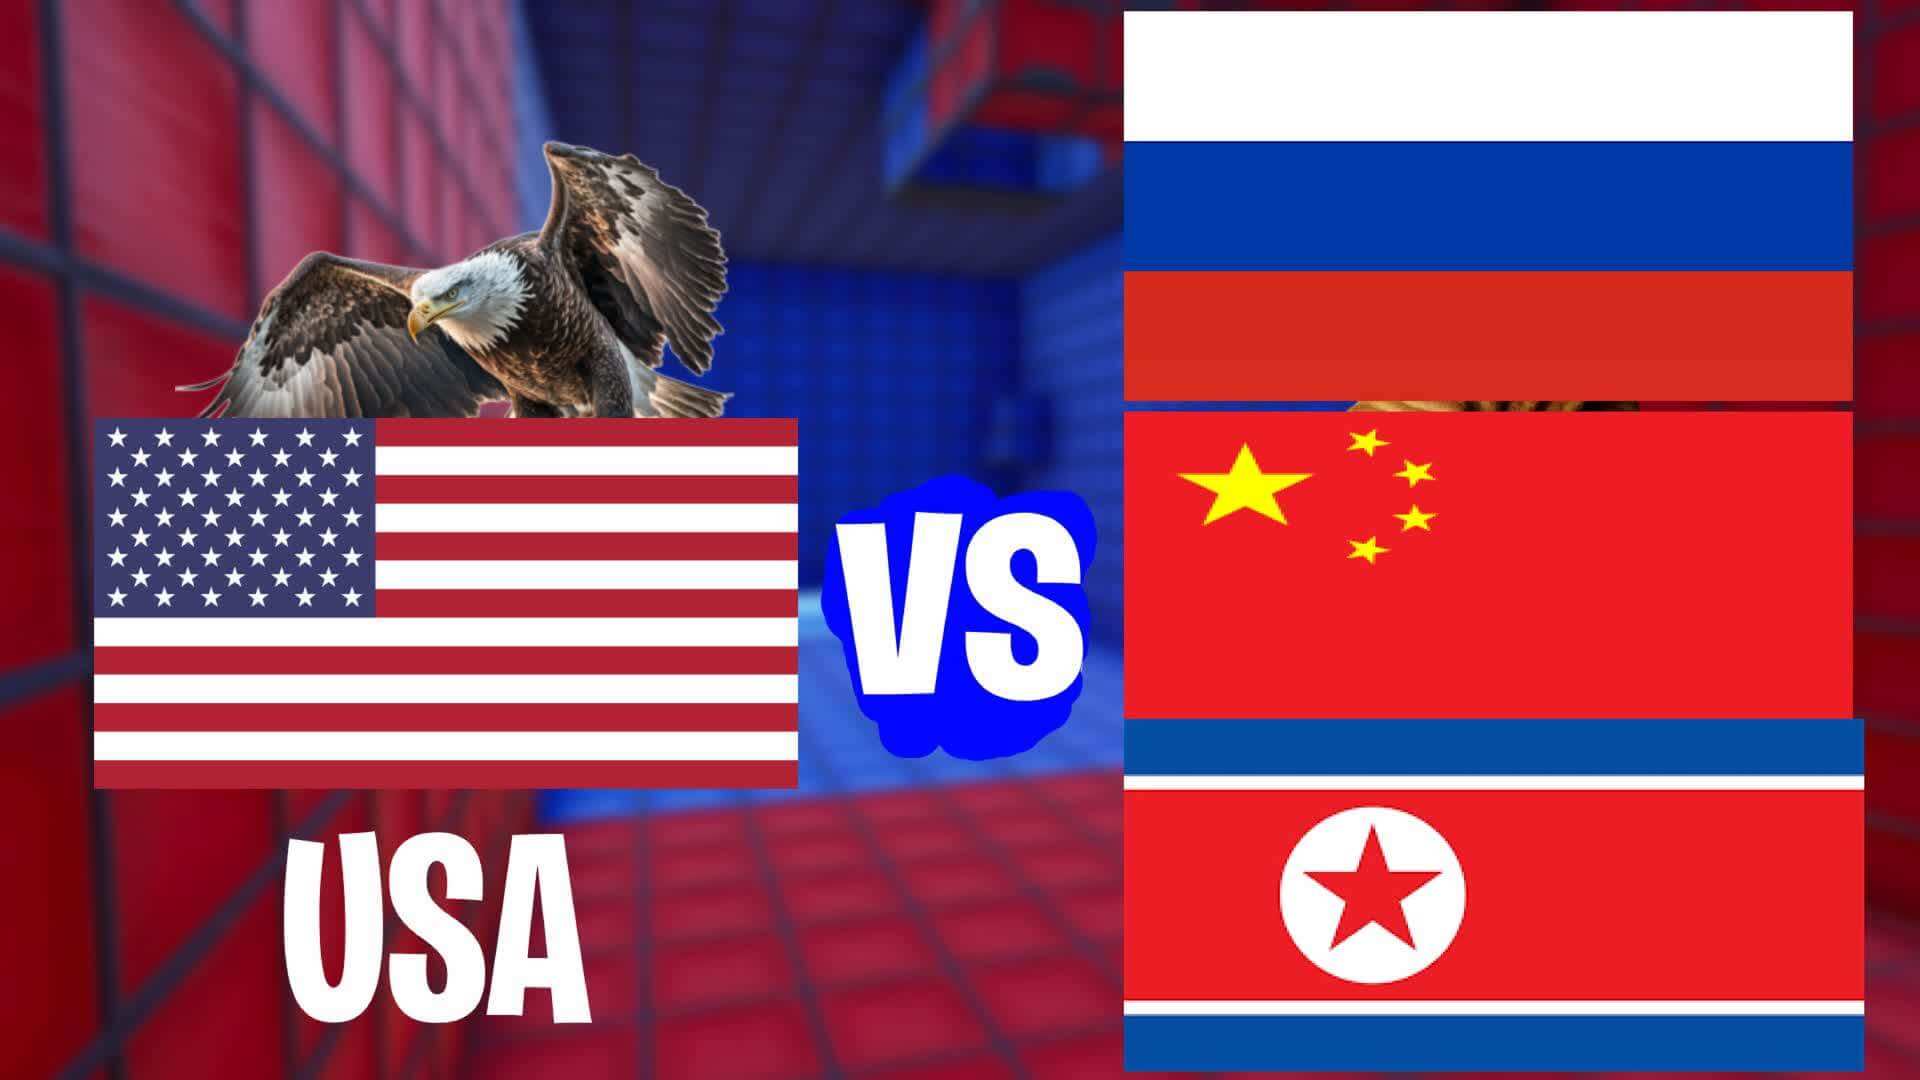 USA vs Russia vs China vs North Korea